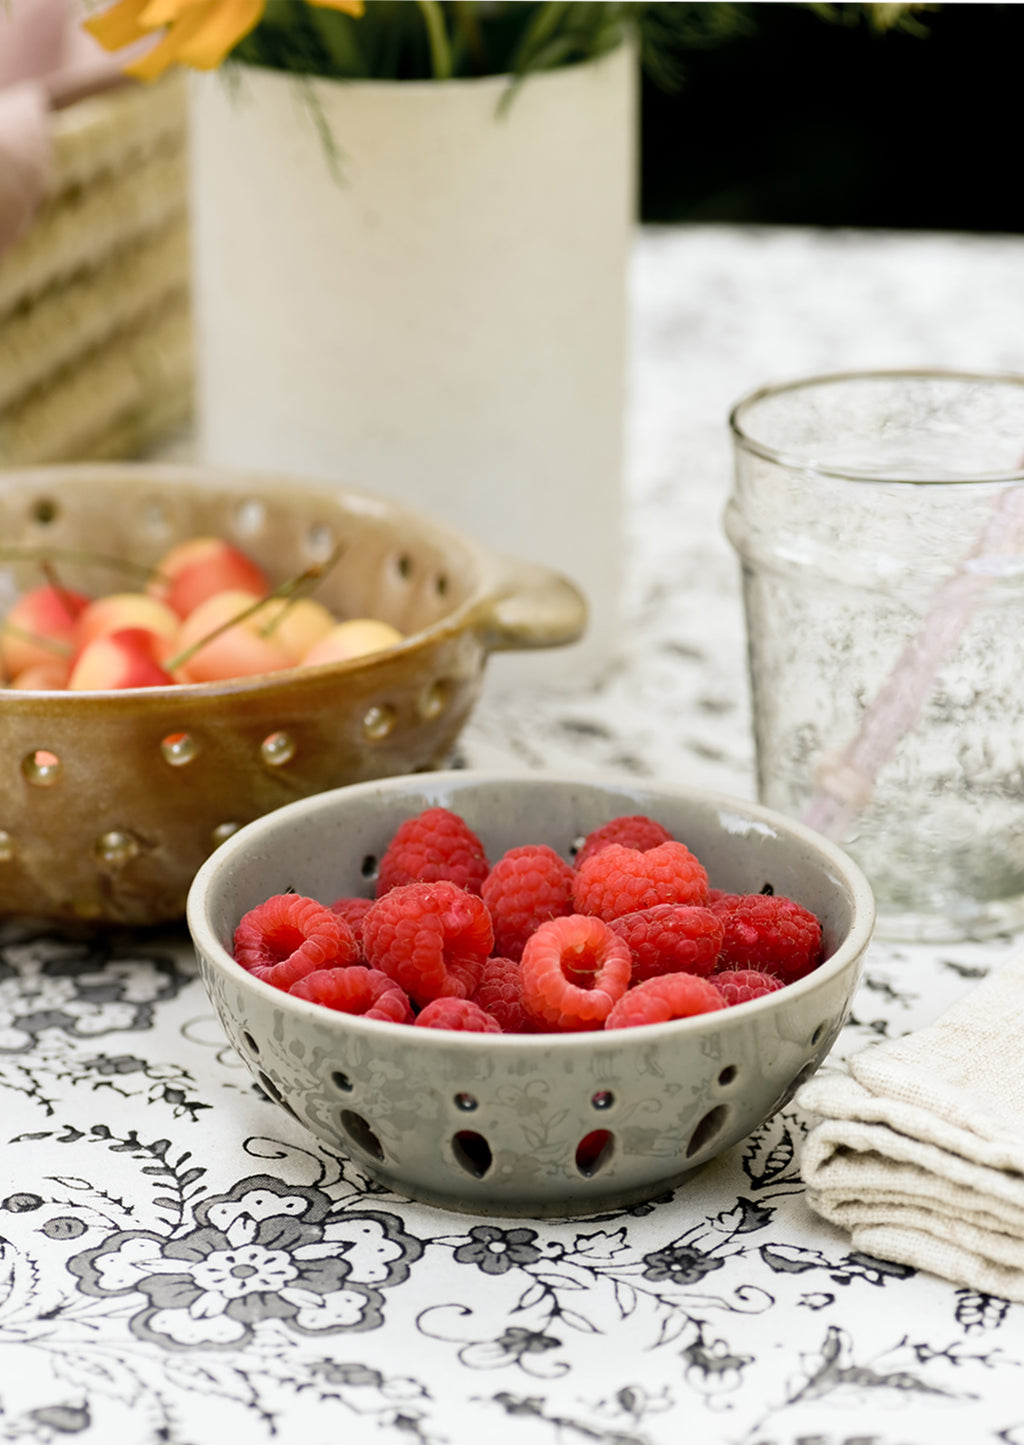 2: A ceramic berry bowl holding raspberries